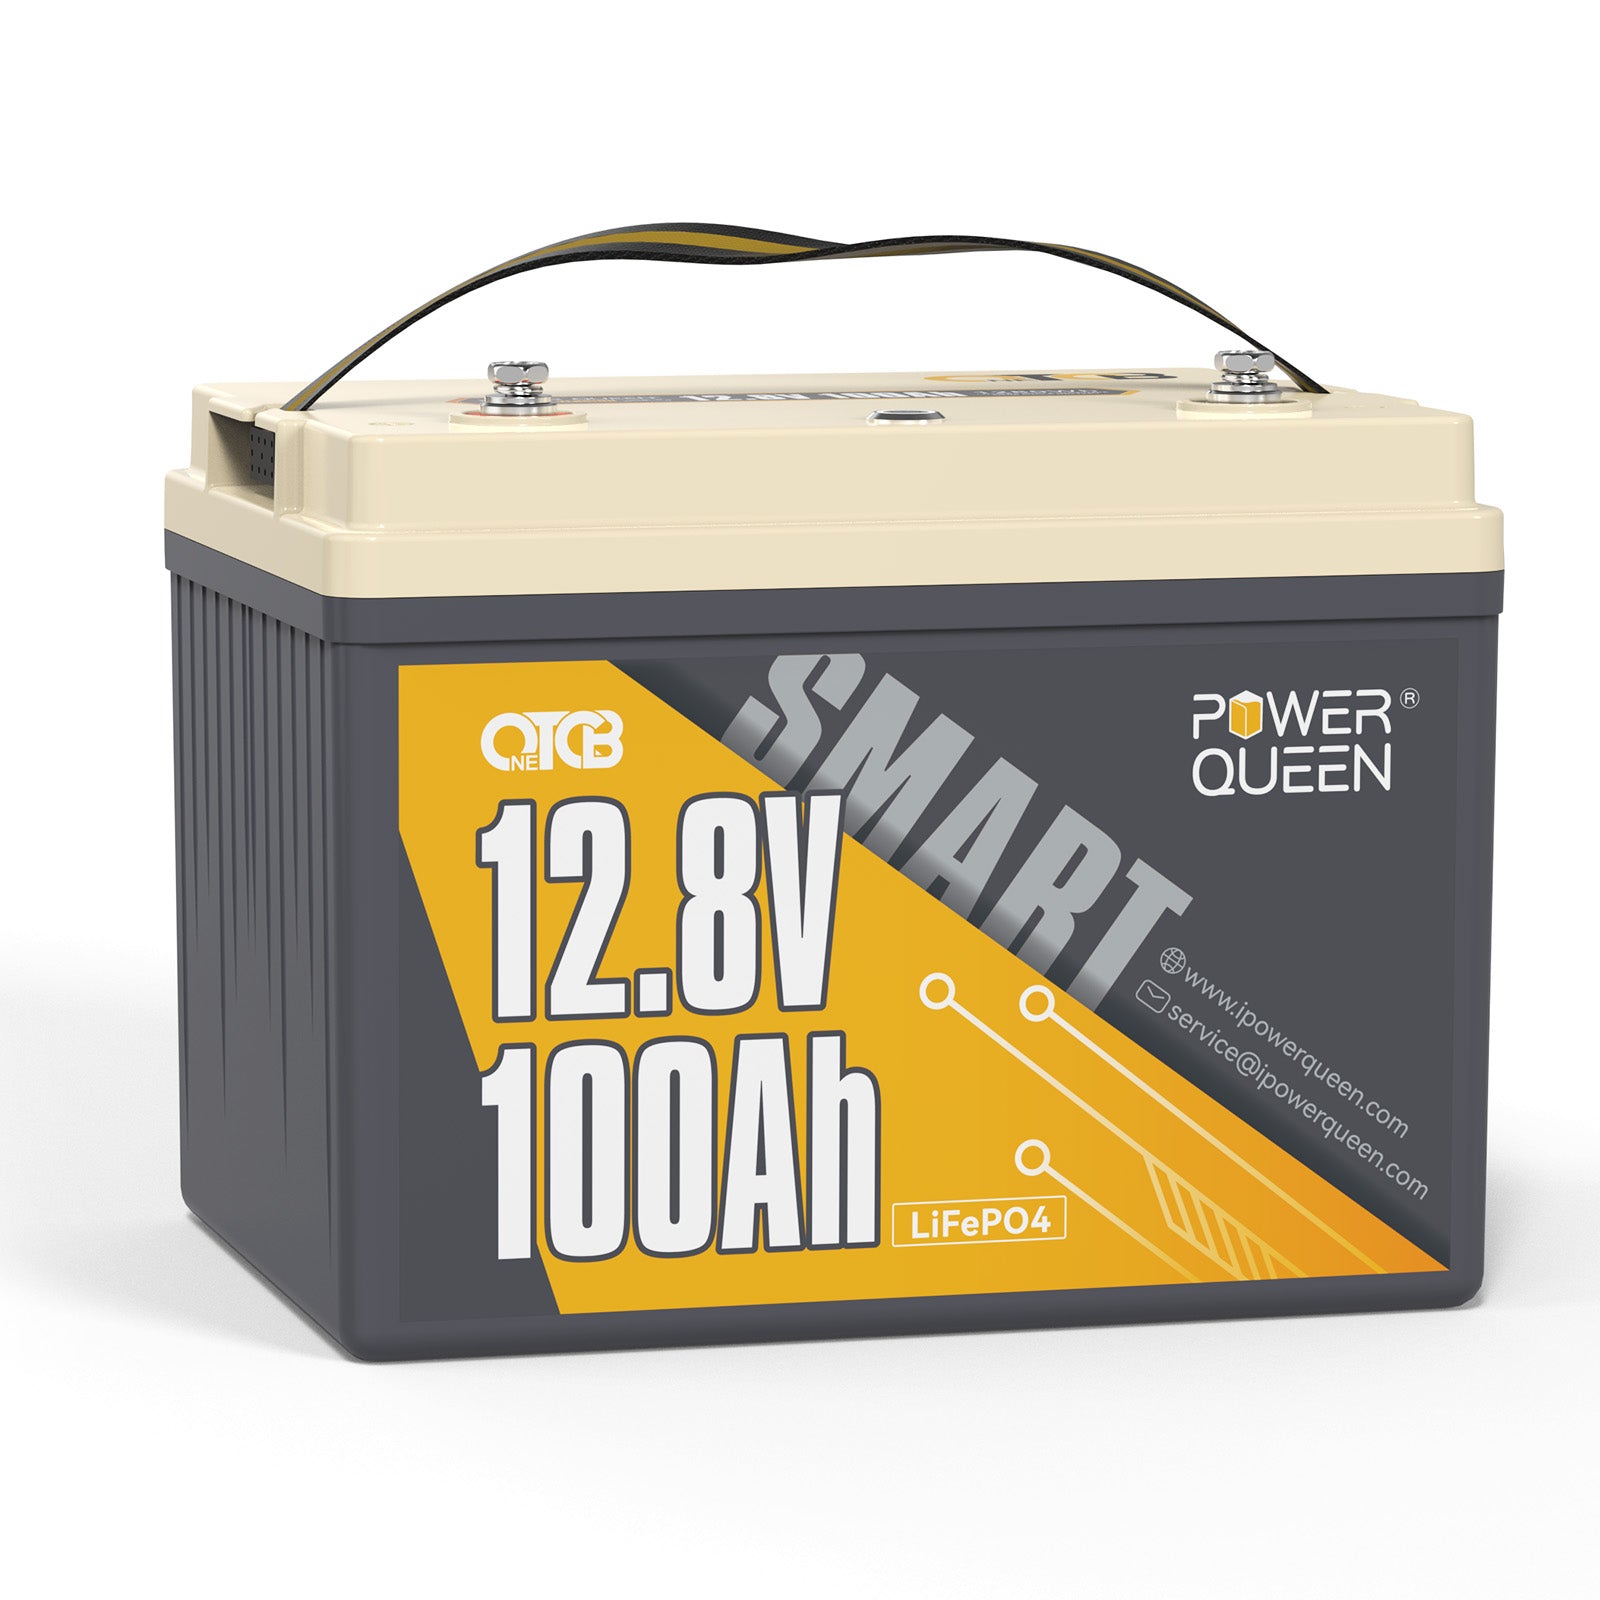 Power Queen 12.8V 100Ah Low Temp OTCB LiFePO4 Battery, Built-in 100A BMS